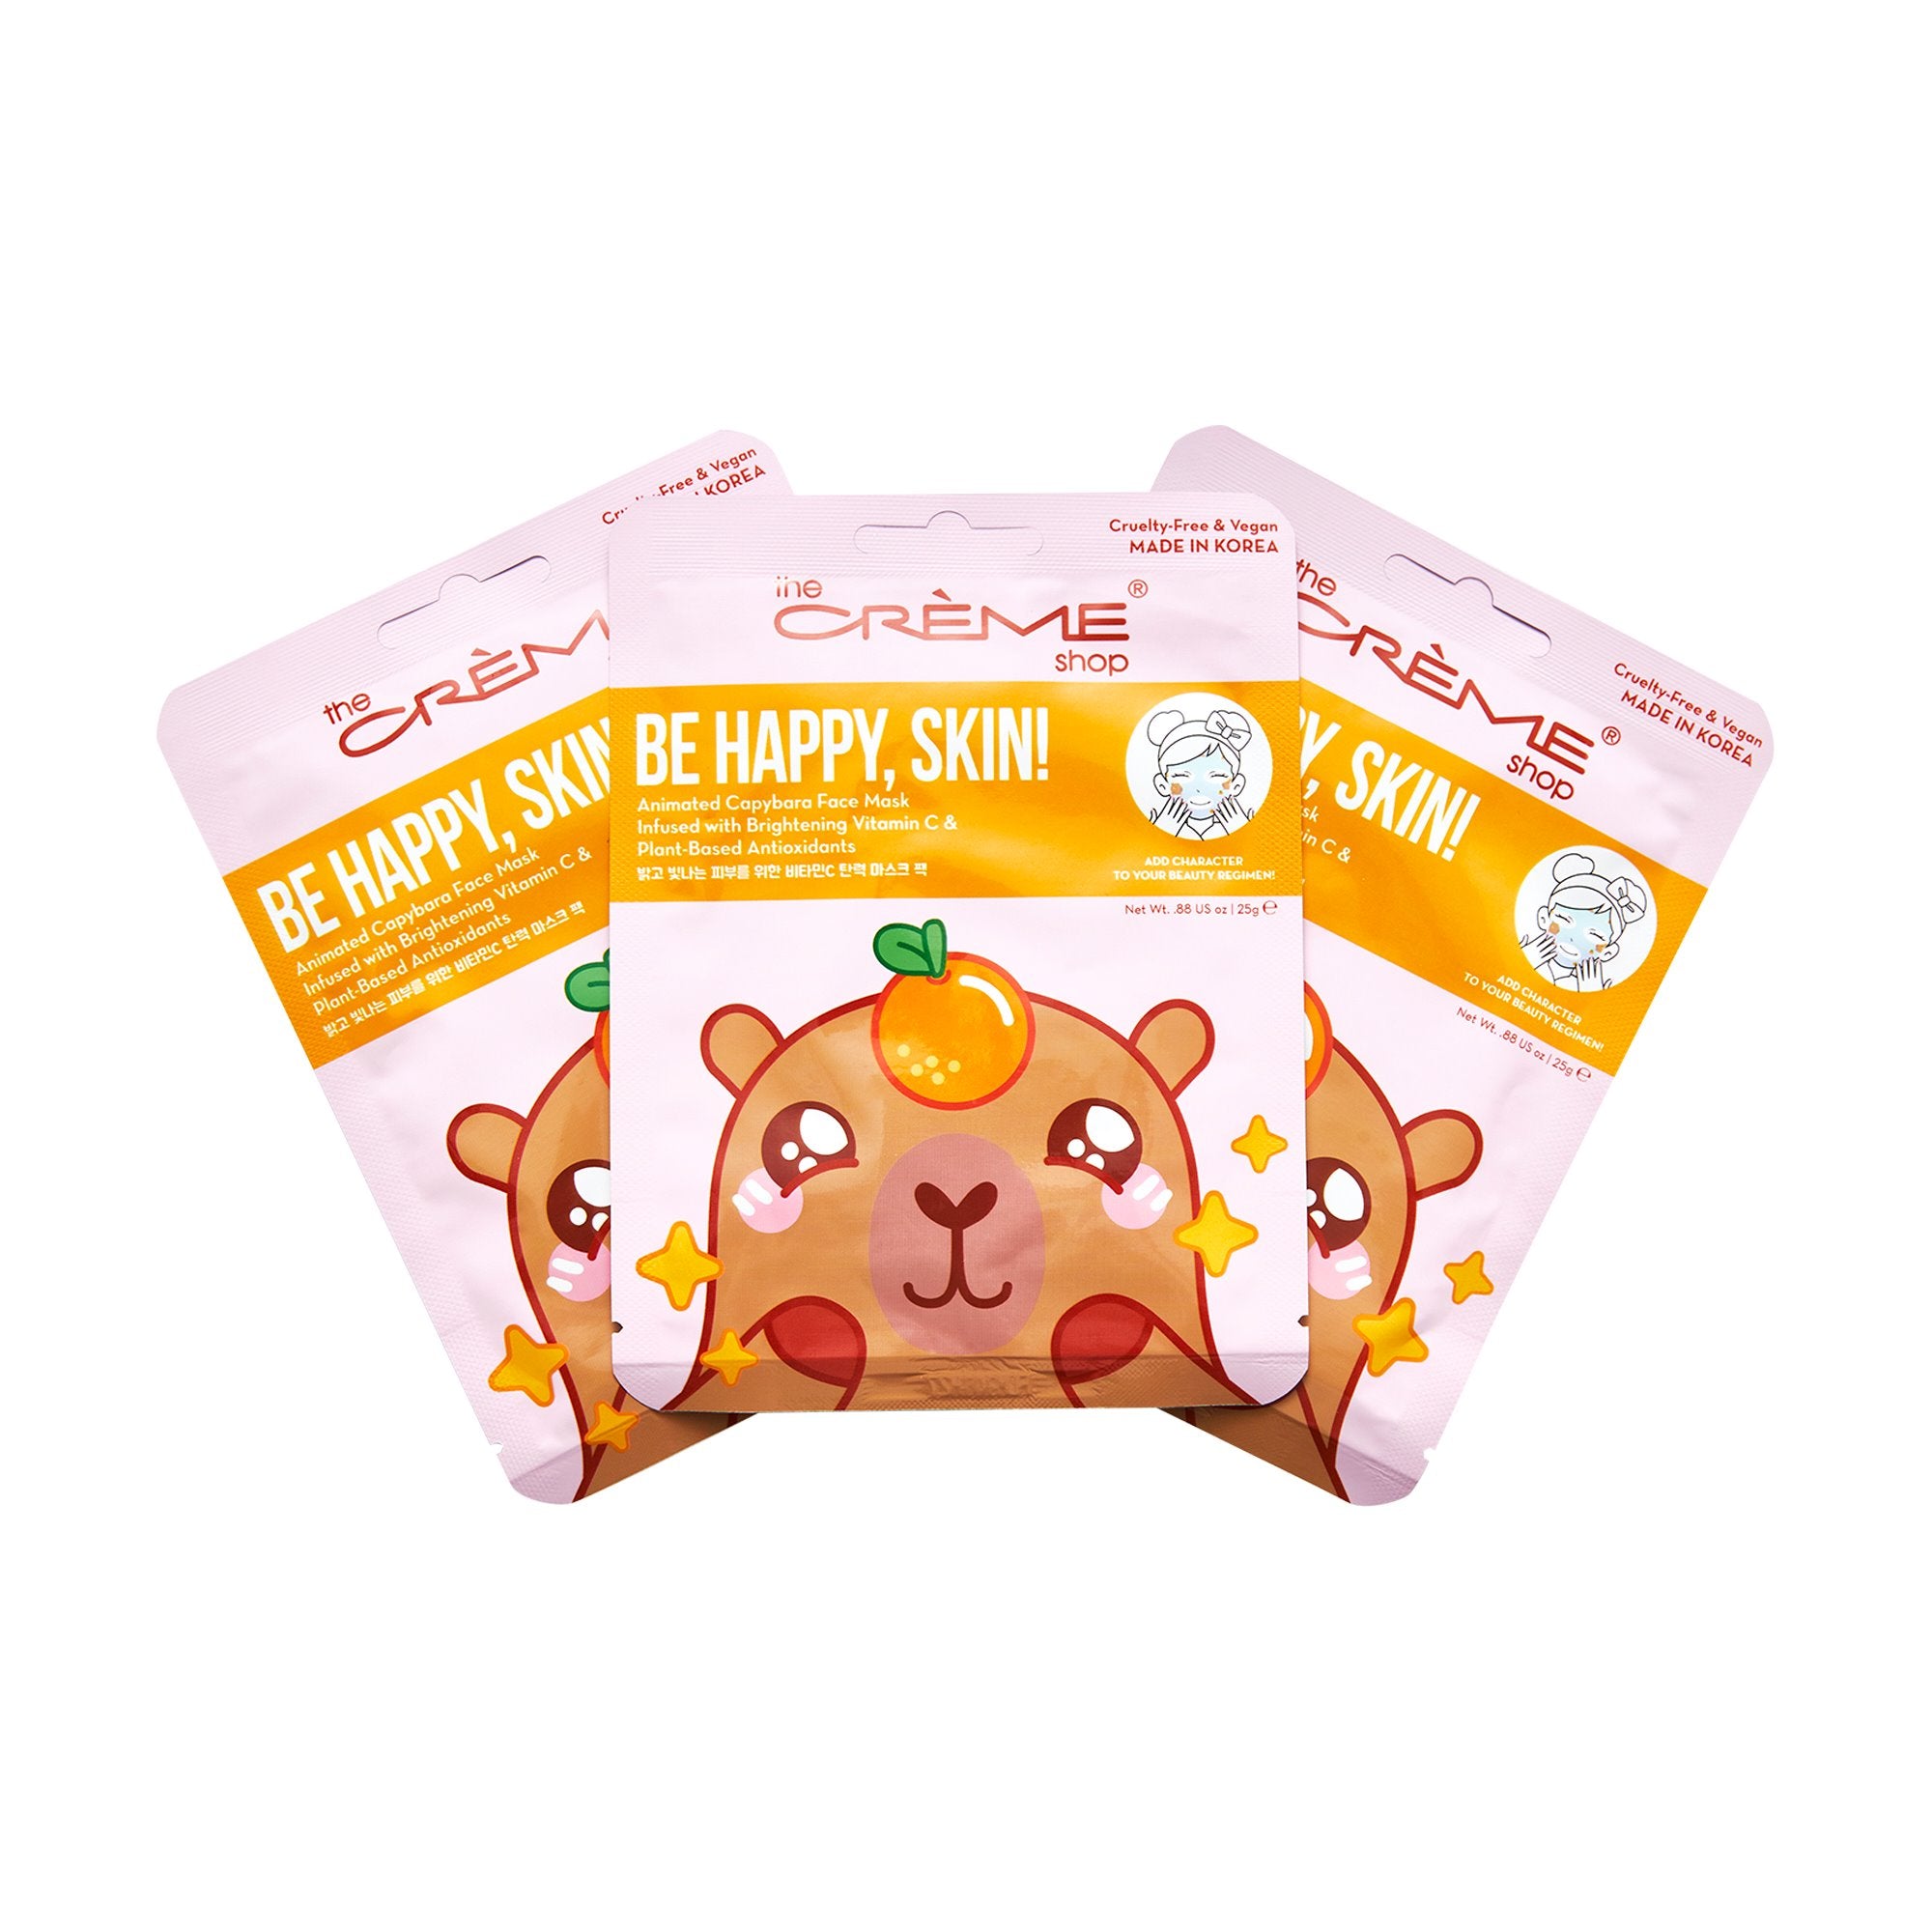 Be Happy, Skin! Animated Capybara Face Mask Sheet Mask The Crème Shop 